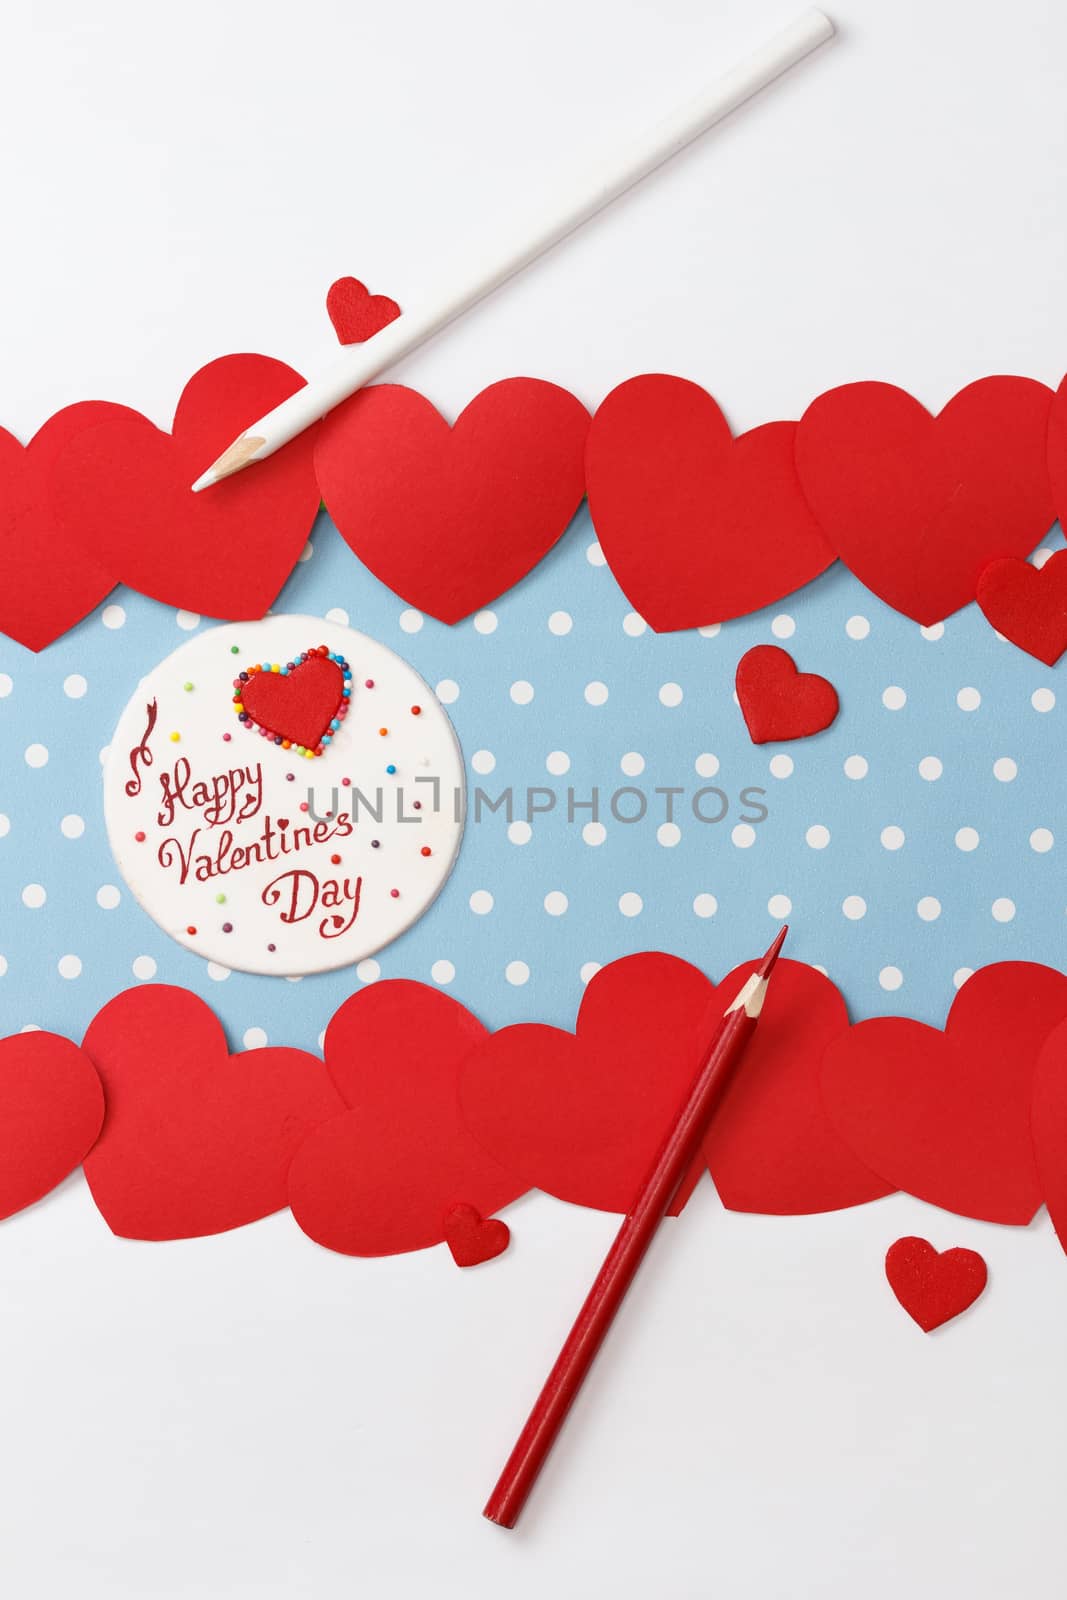 Valentine's day love message by mrakor